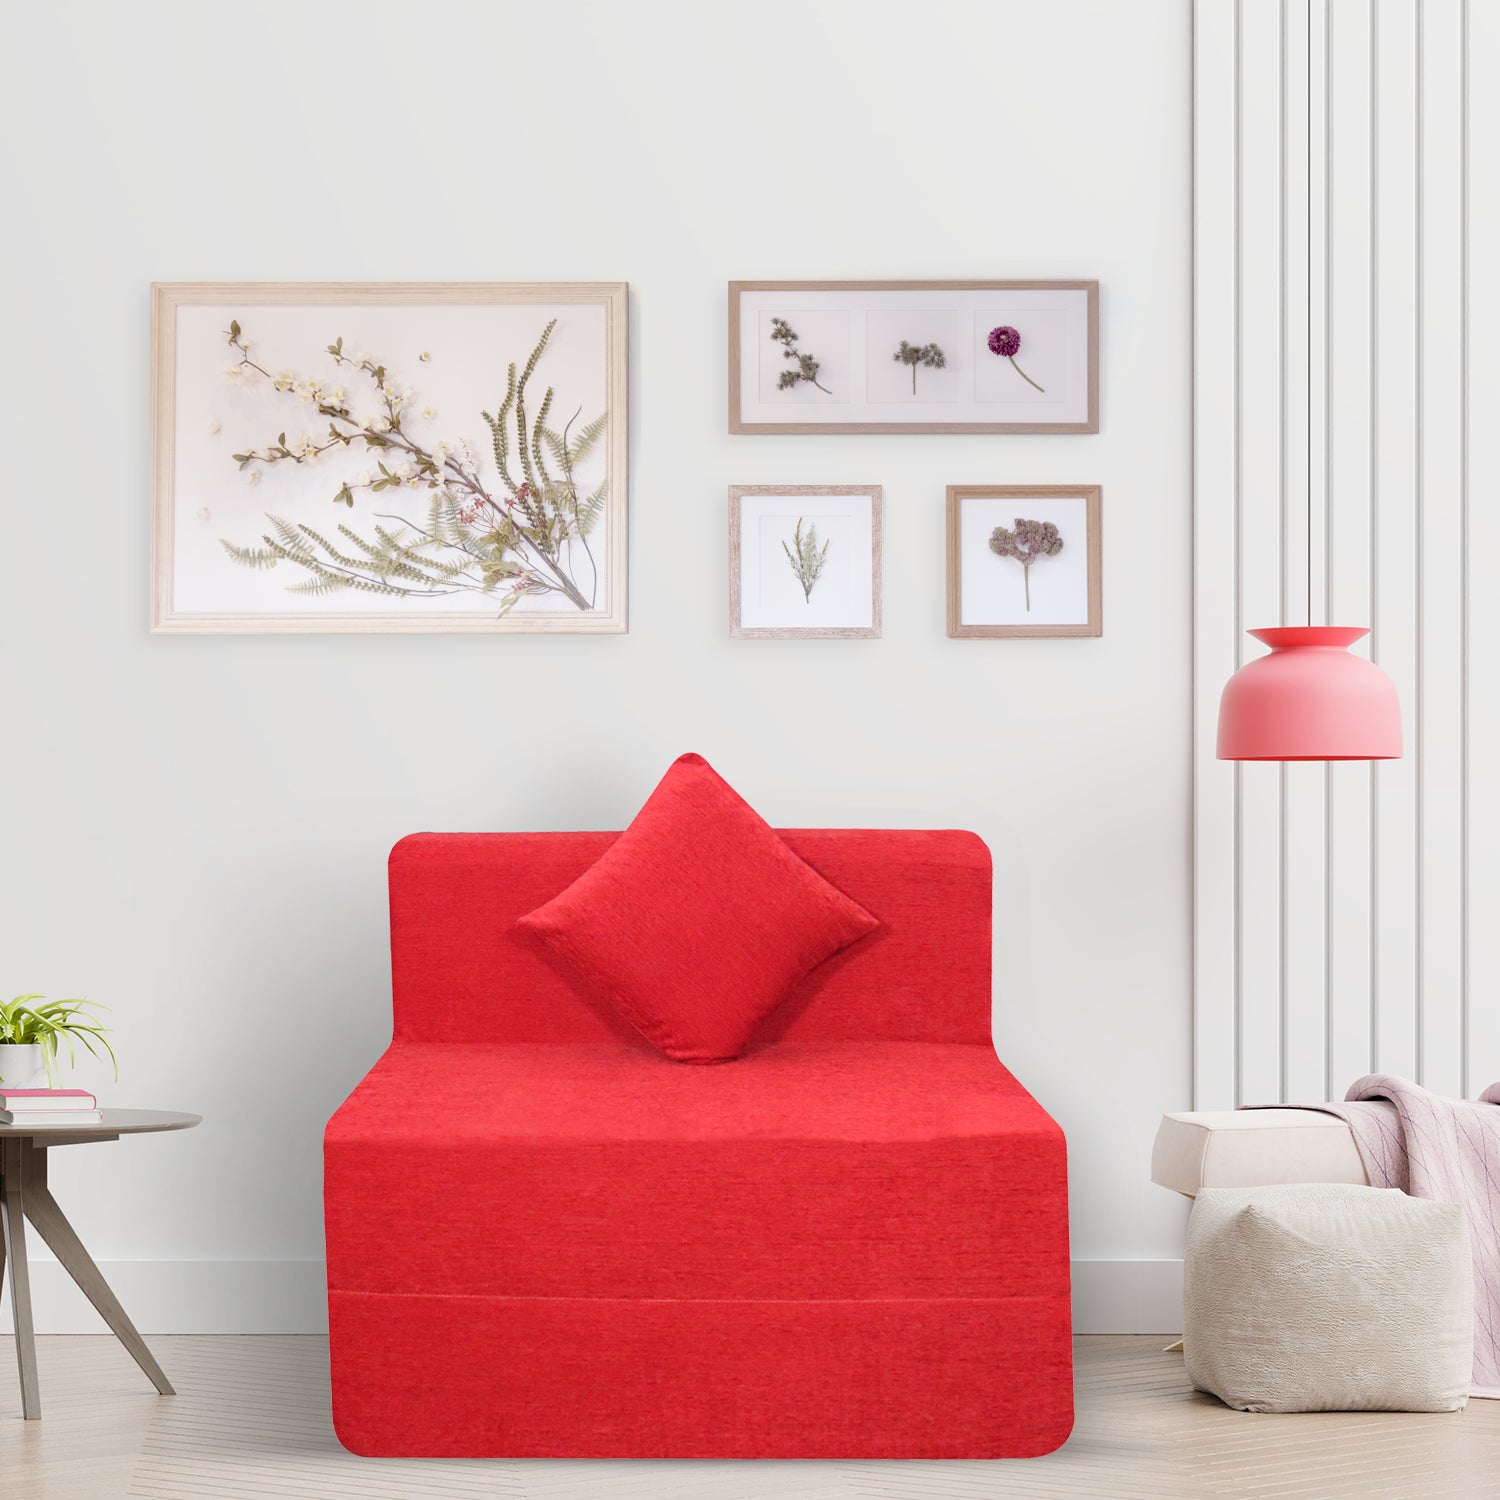 Red Molfino Fabric 6×2.5 Sofa cum Bed with 1 Cushion